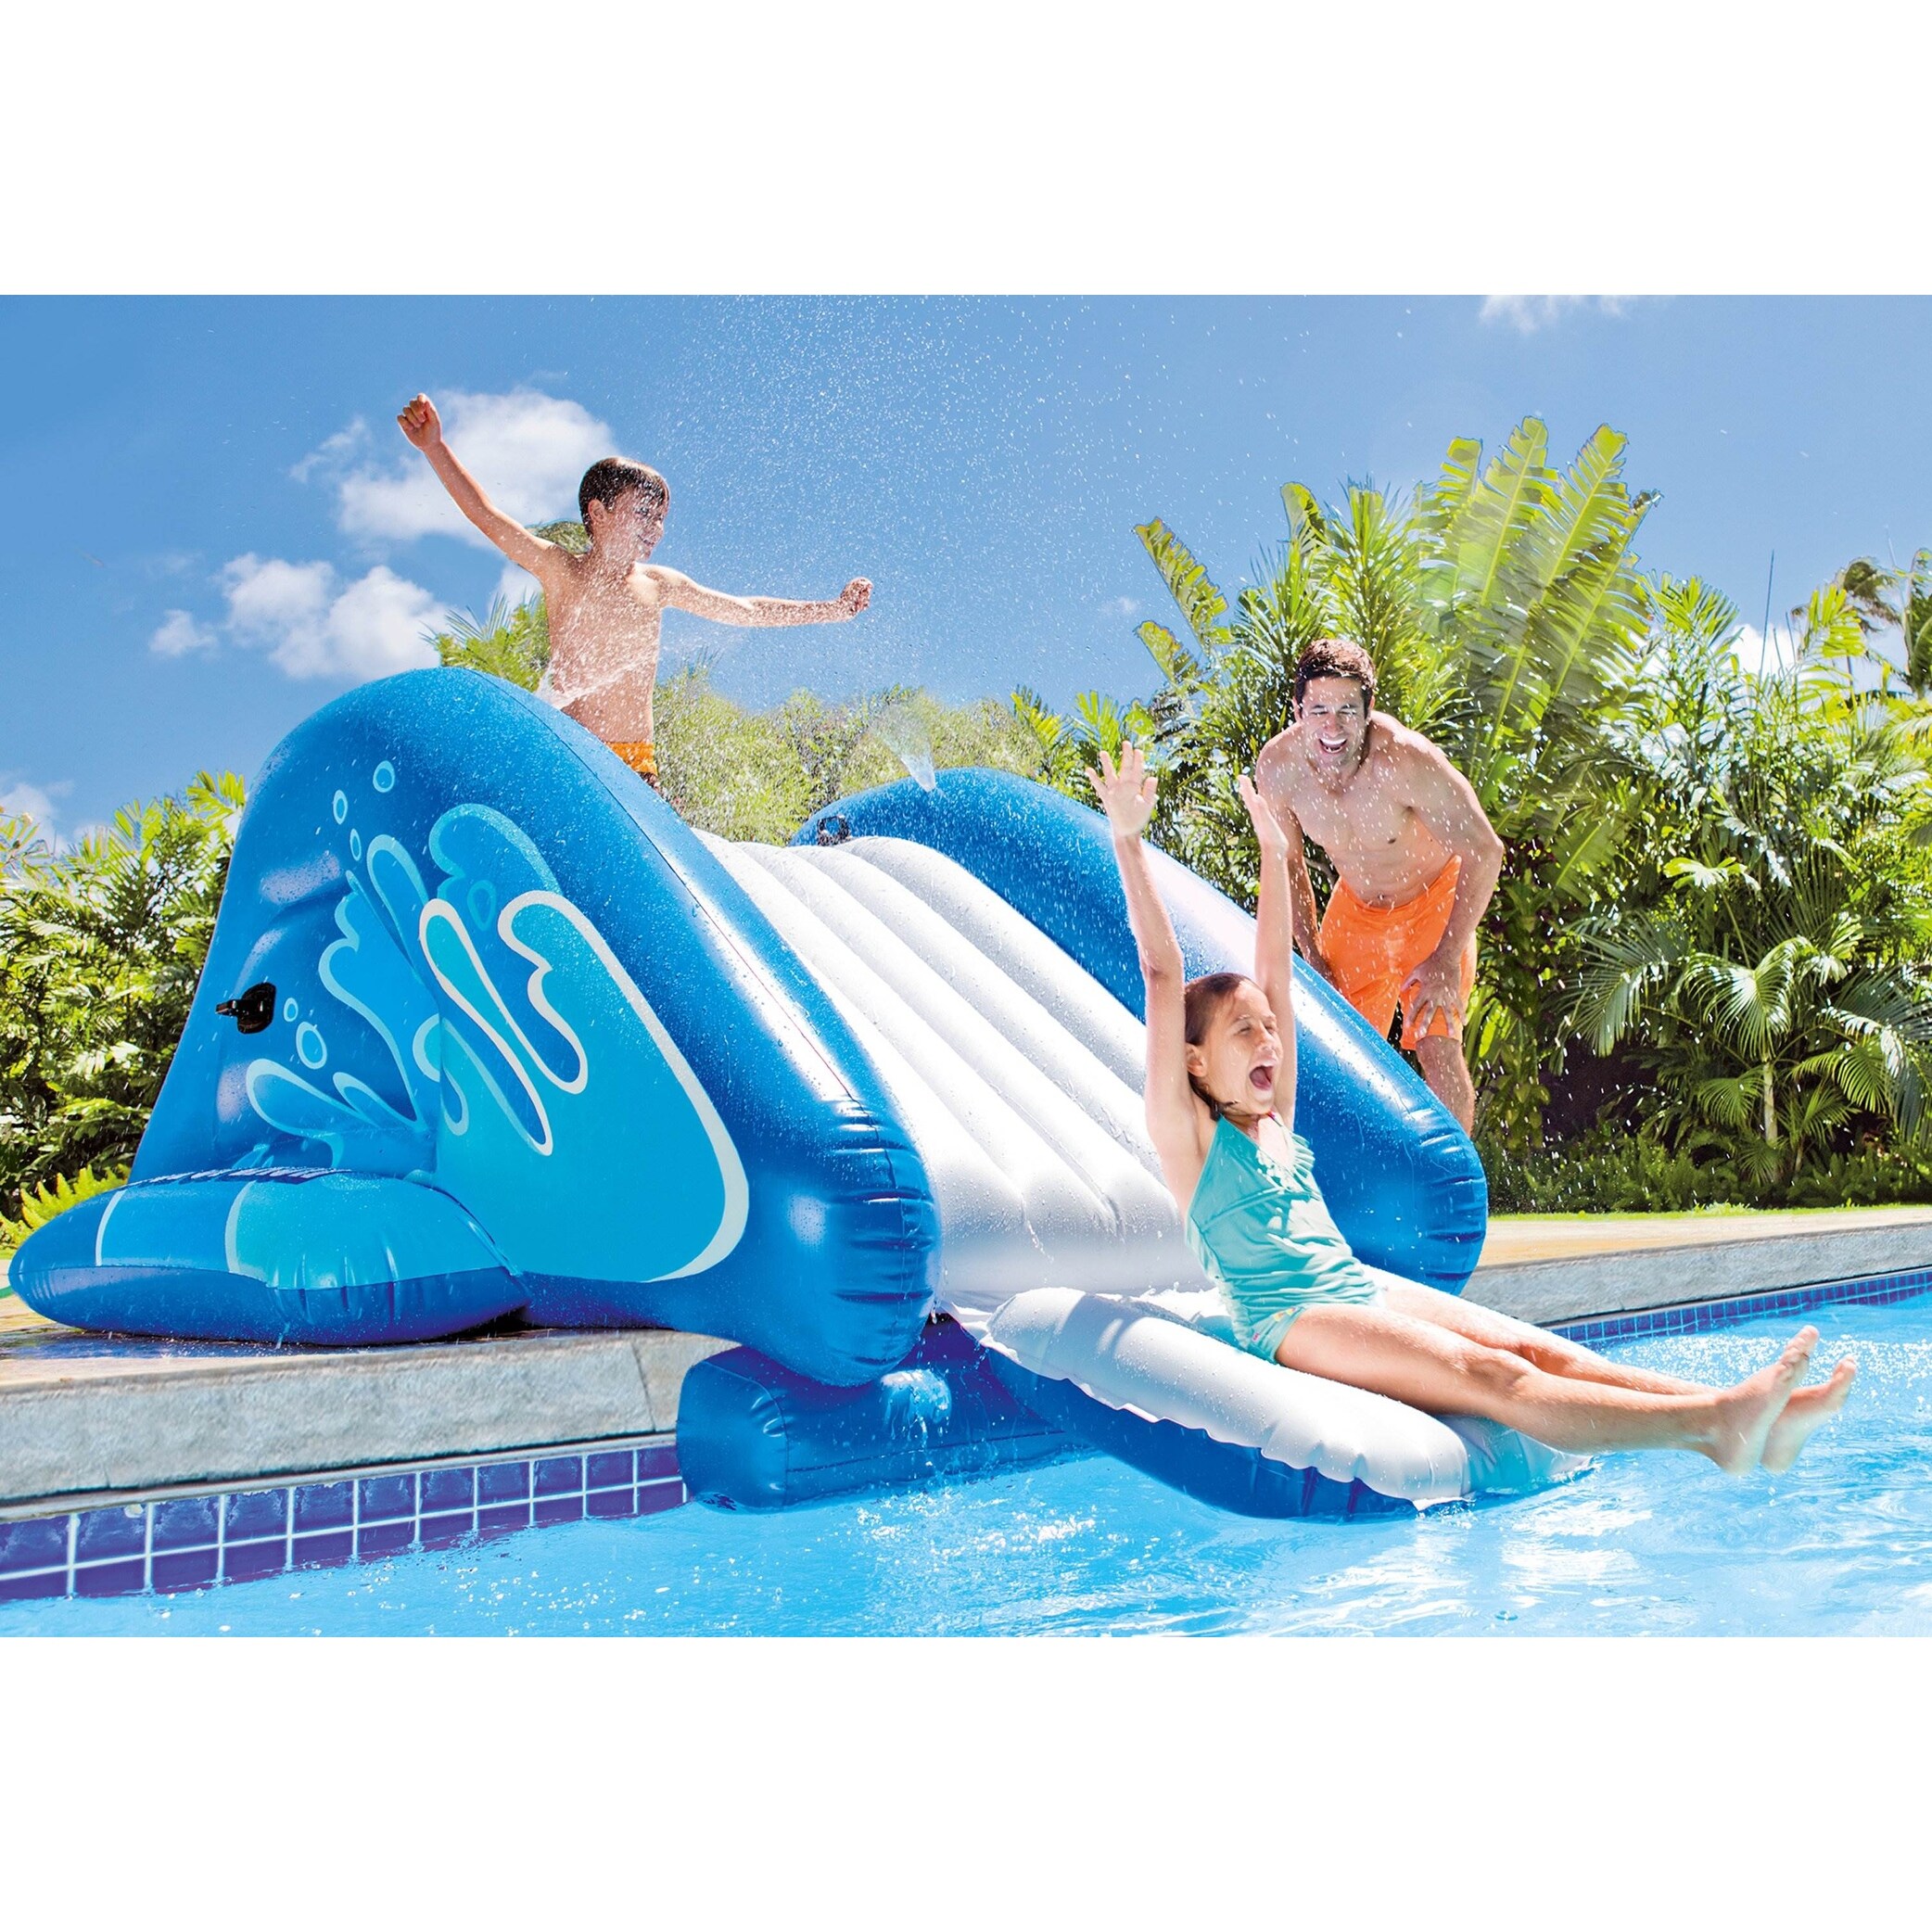 Intex Kool Splash Inflatable Play Center and Adhesive Repair Patch 6 Pack  Kit - Bed Bath & Beyond - 35460859